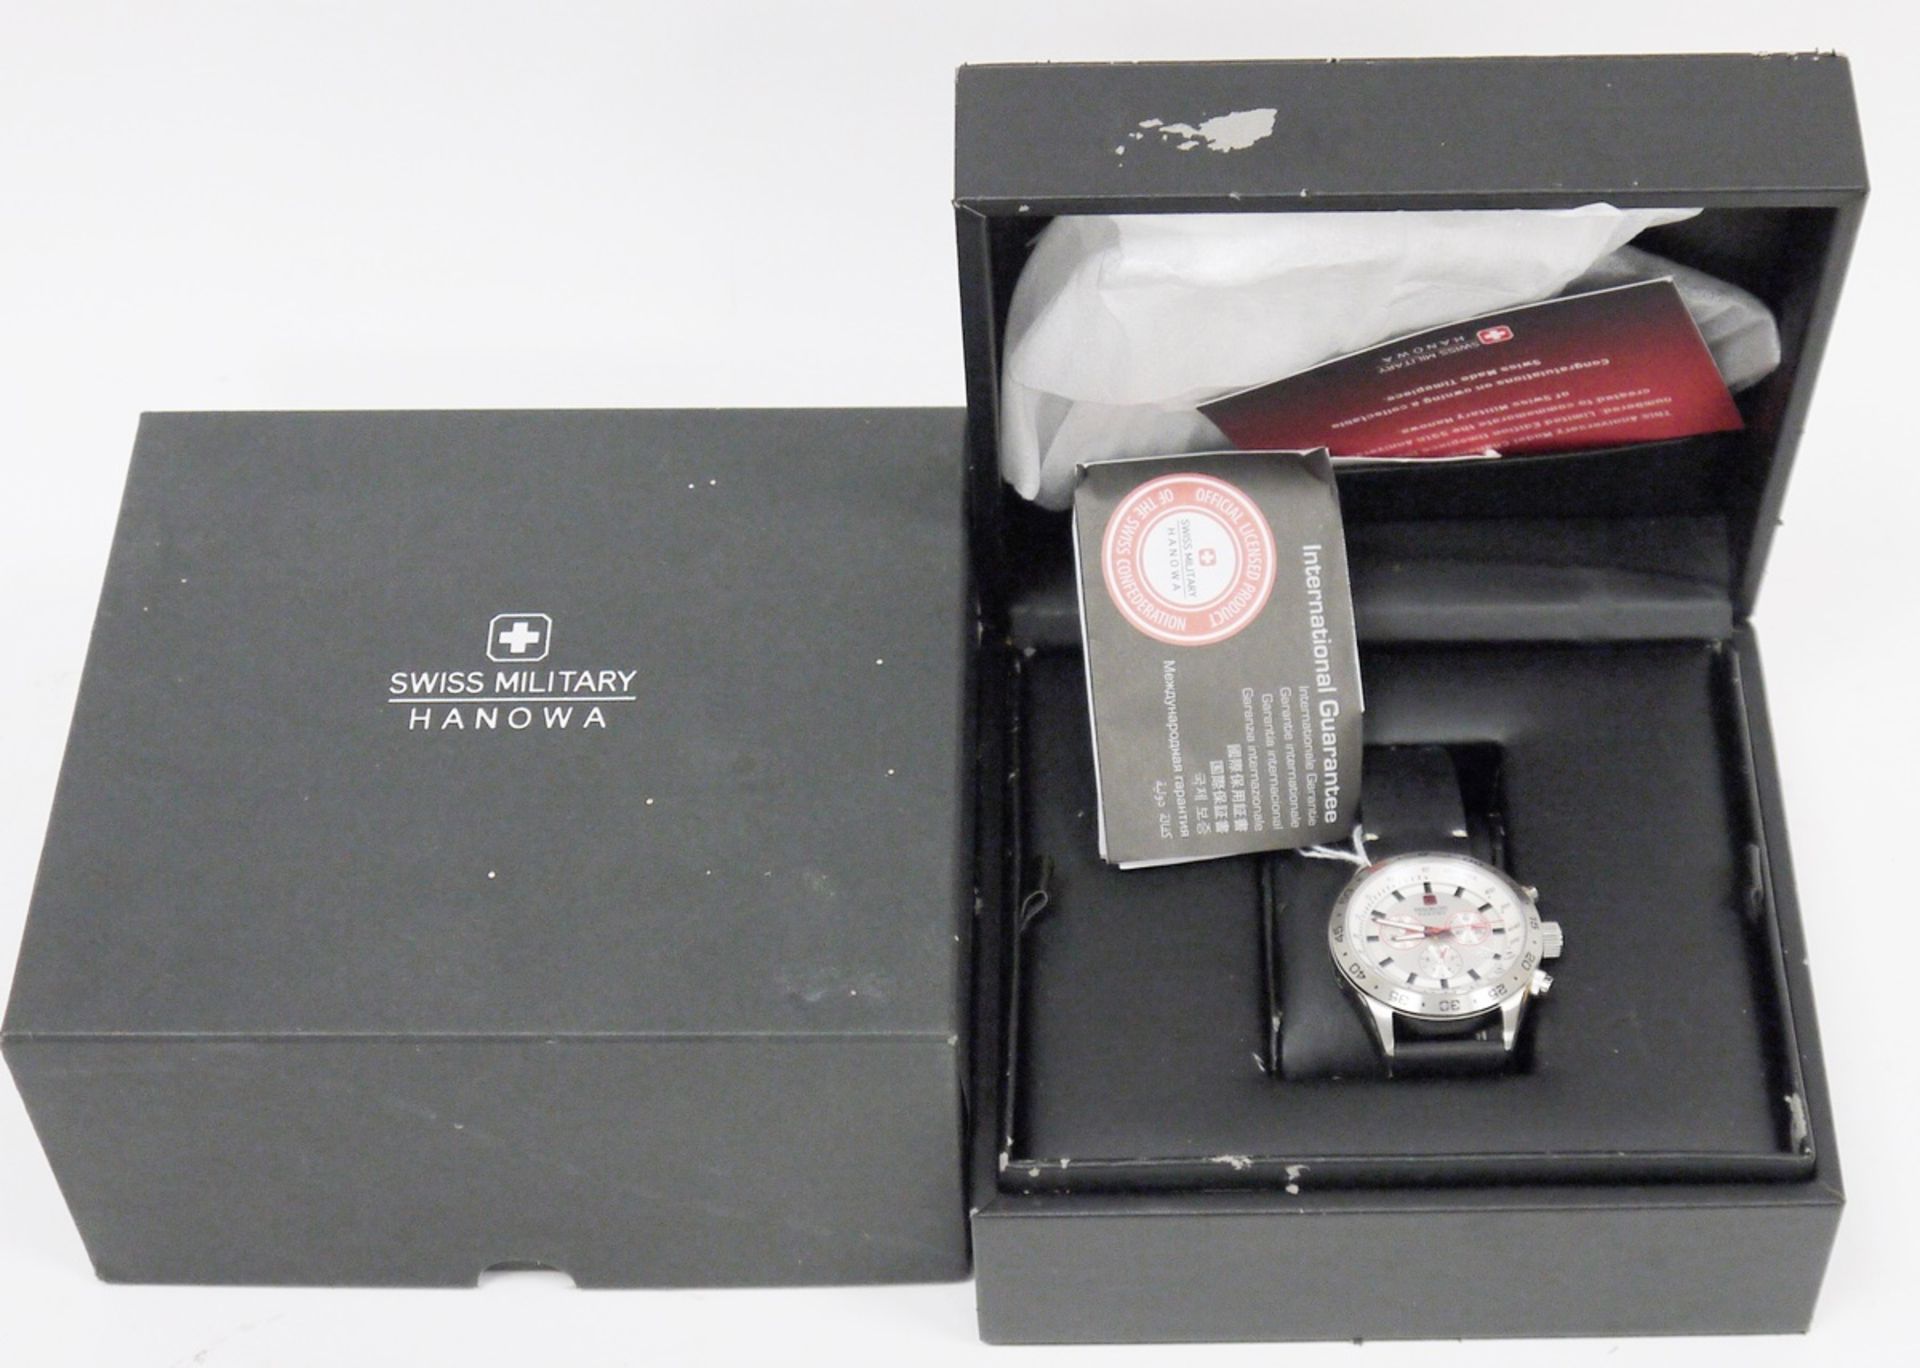 Swiss military Hanowa quartz gent's chronograph wristwatch, the silvered dial with baton hour